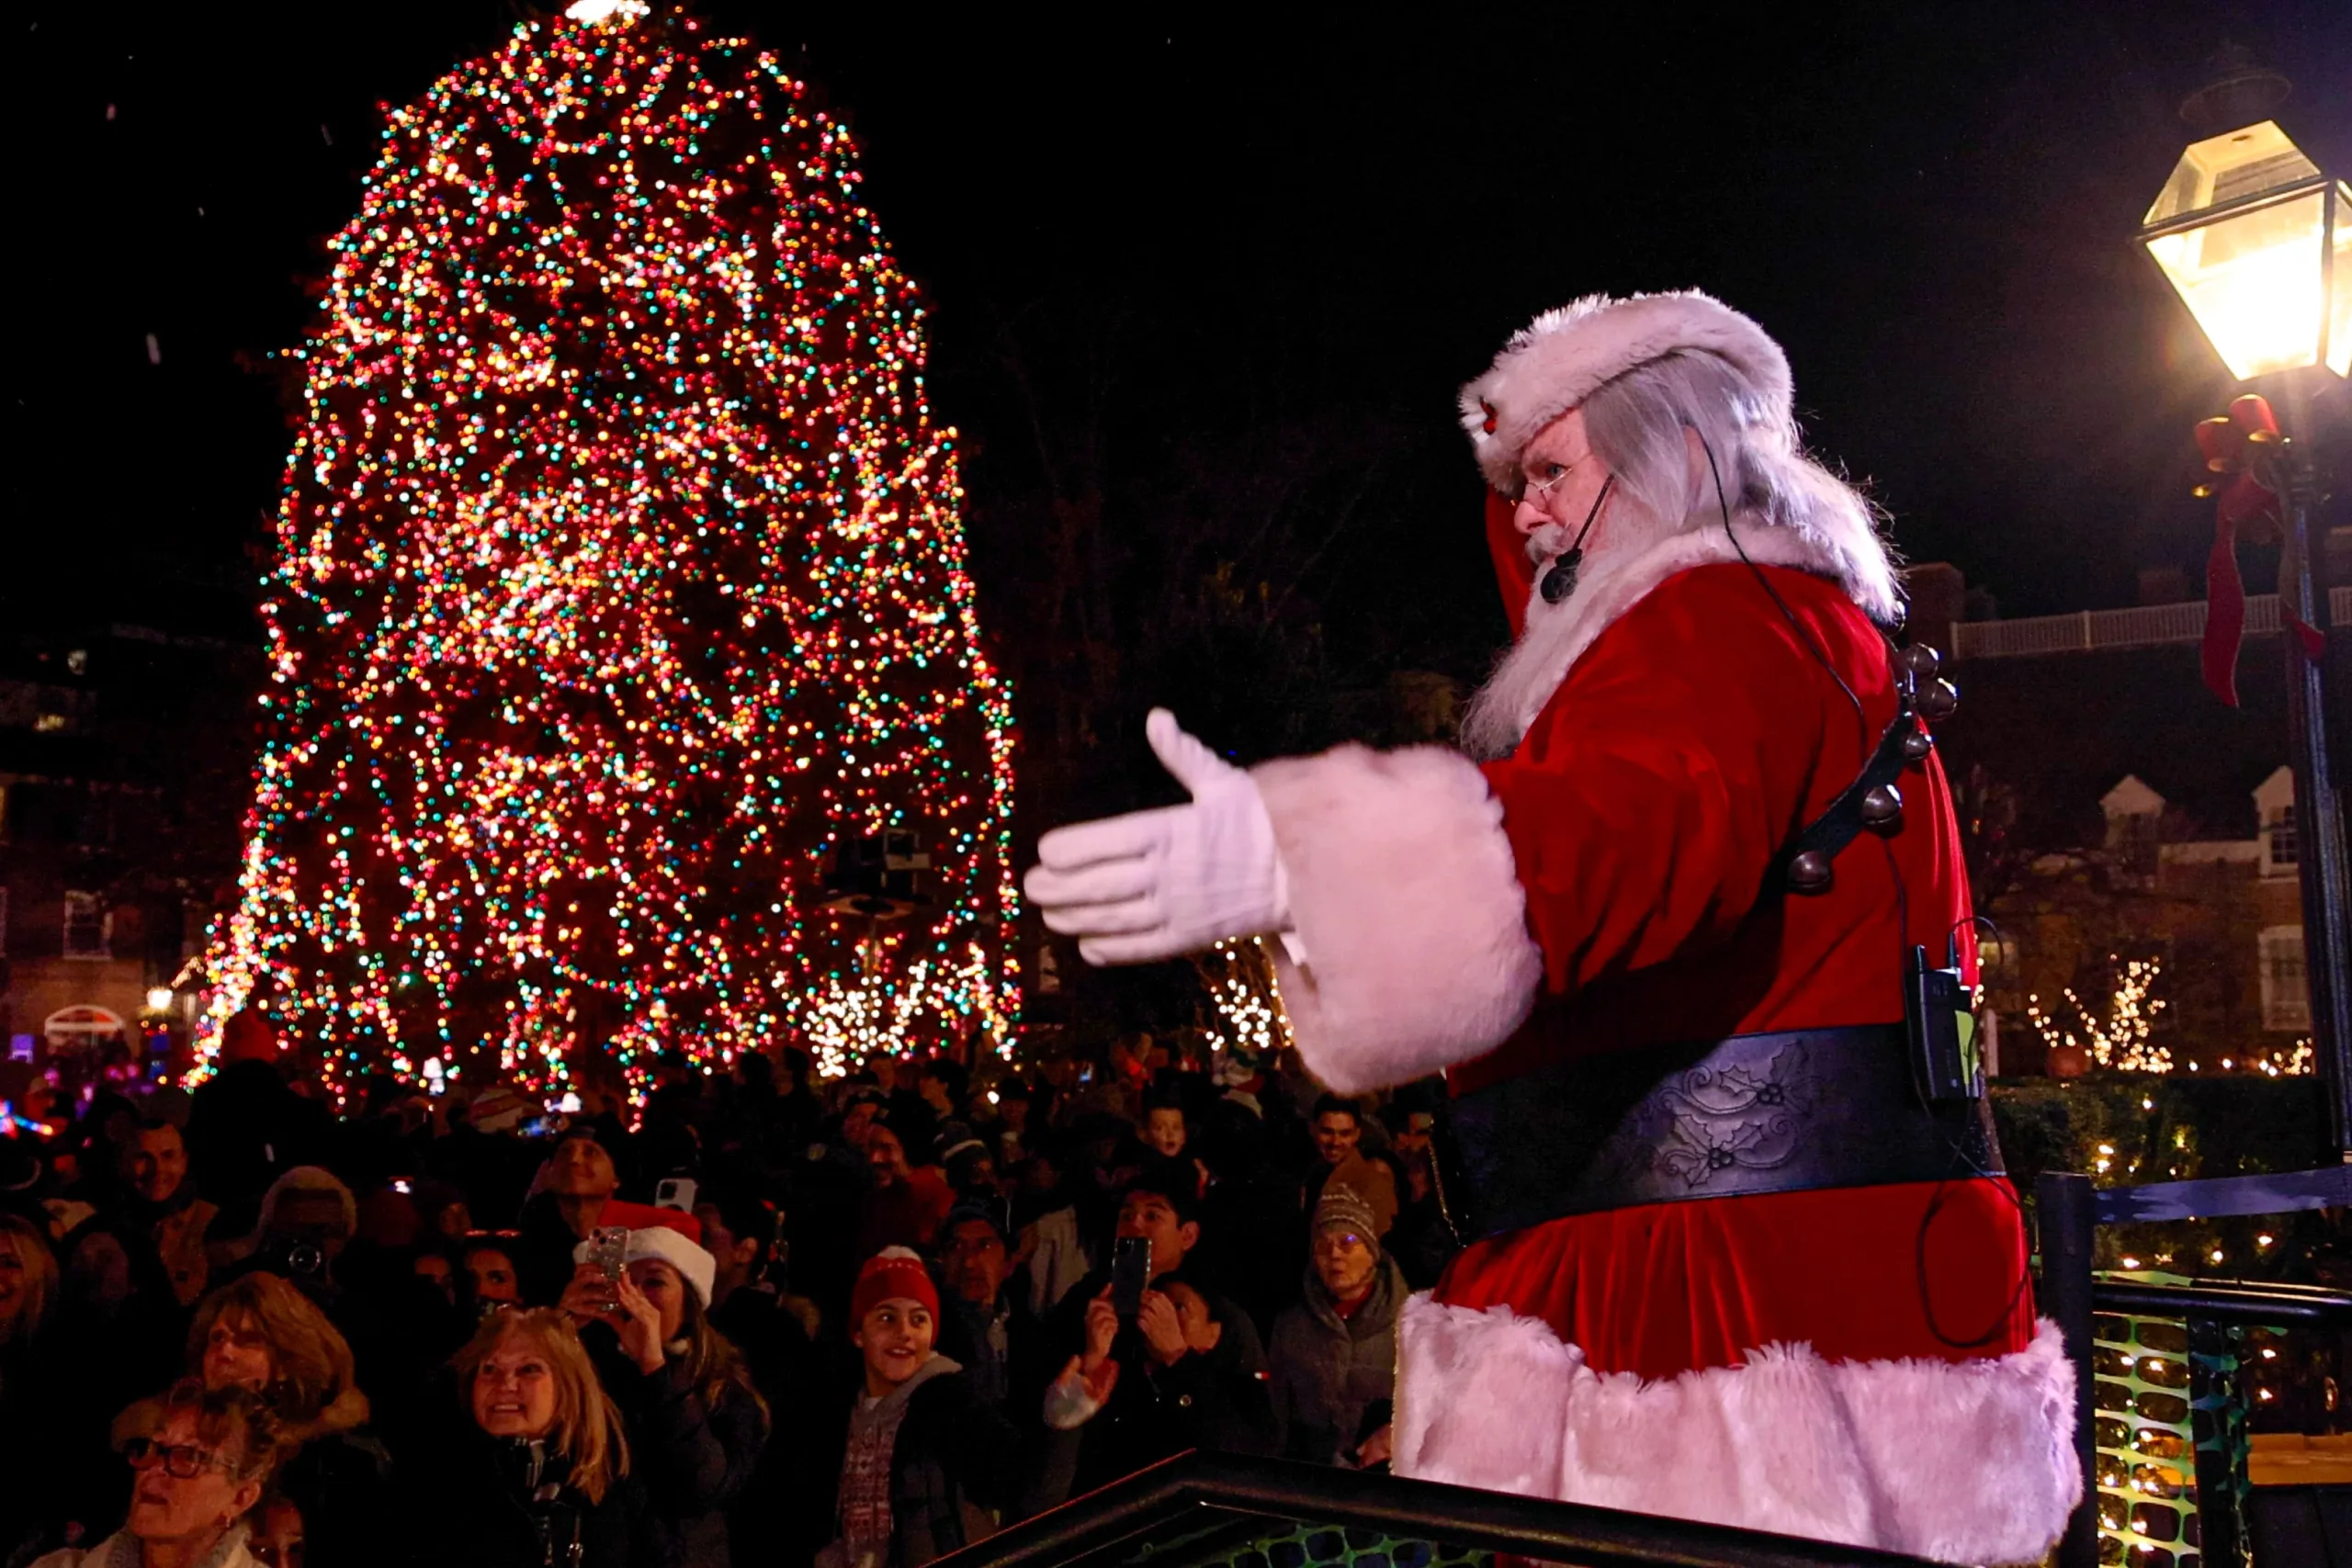 Santa greeting patrons, lit up Christmas tree